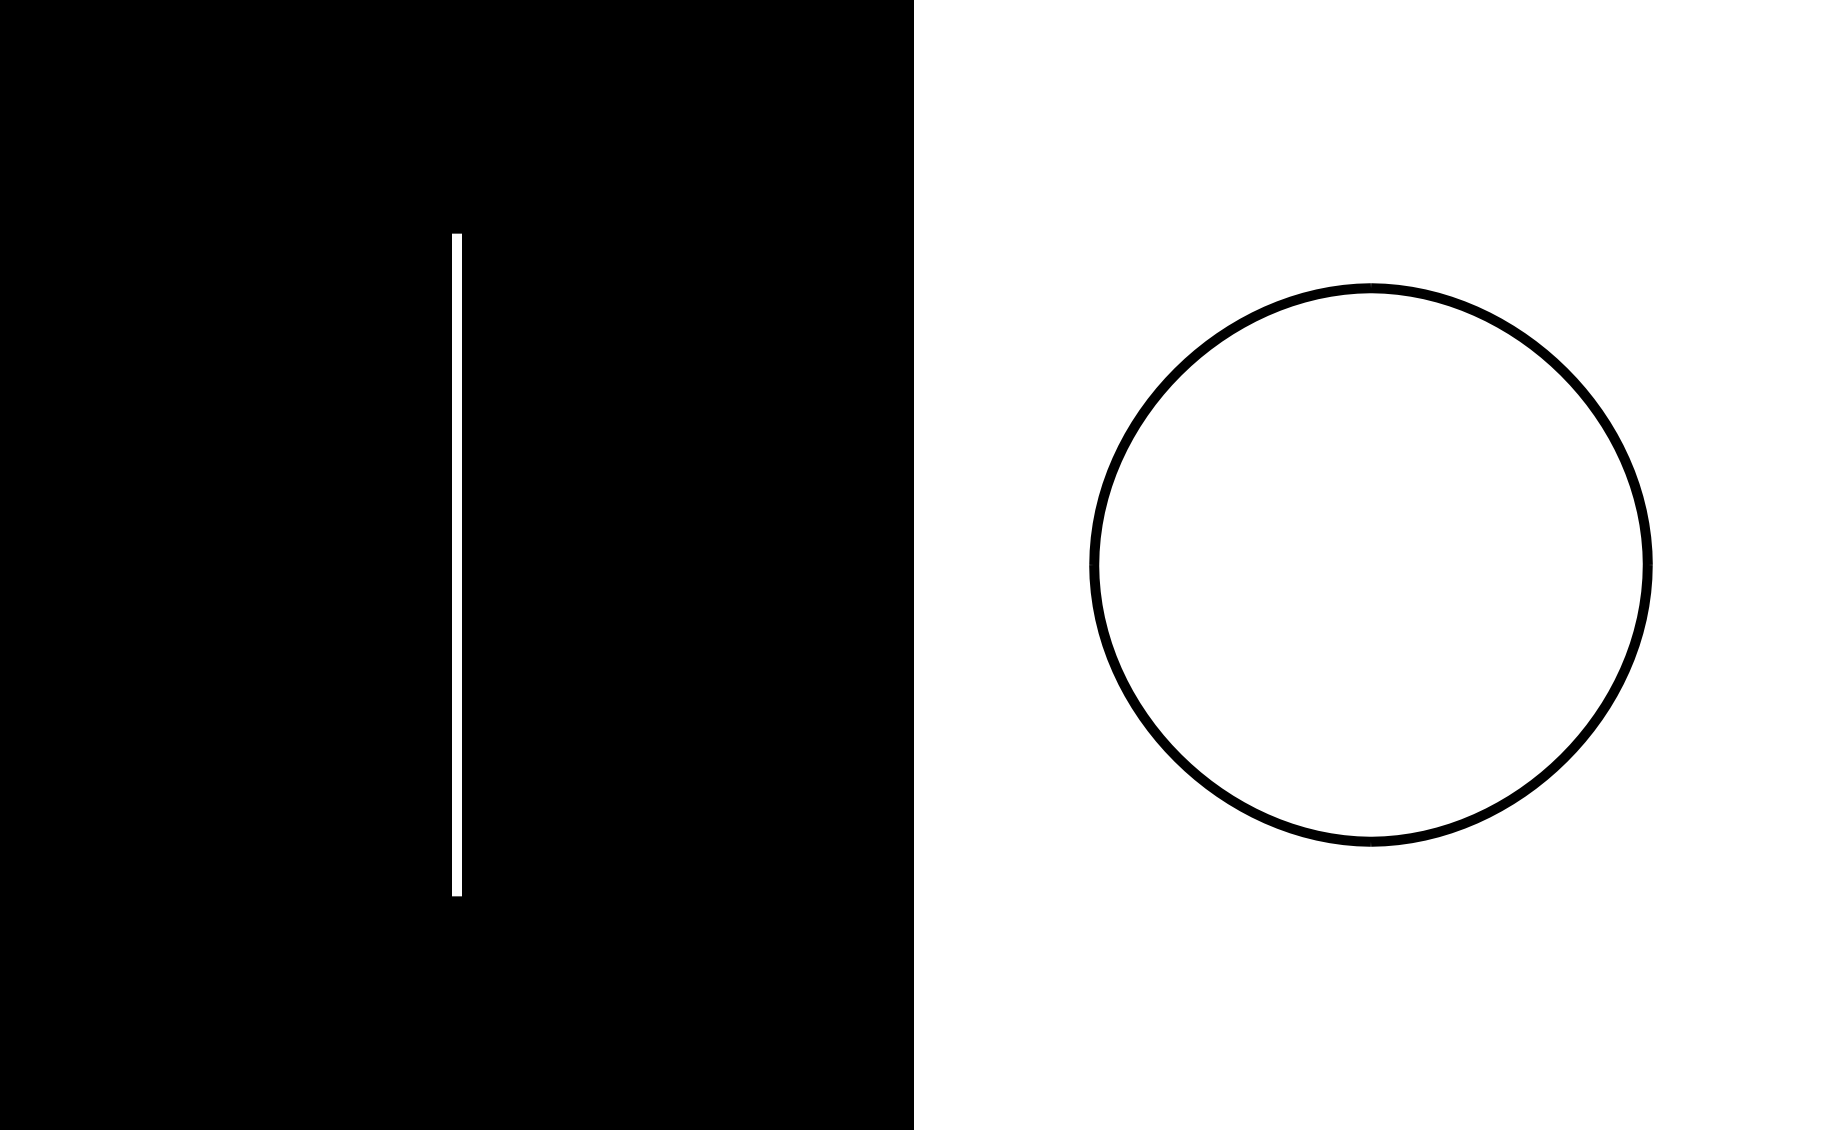 white vertical line, black circle